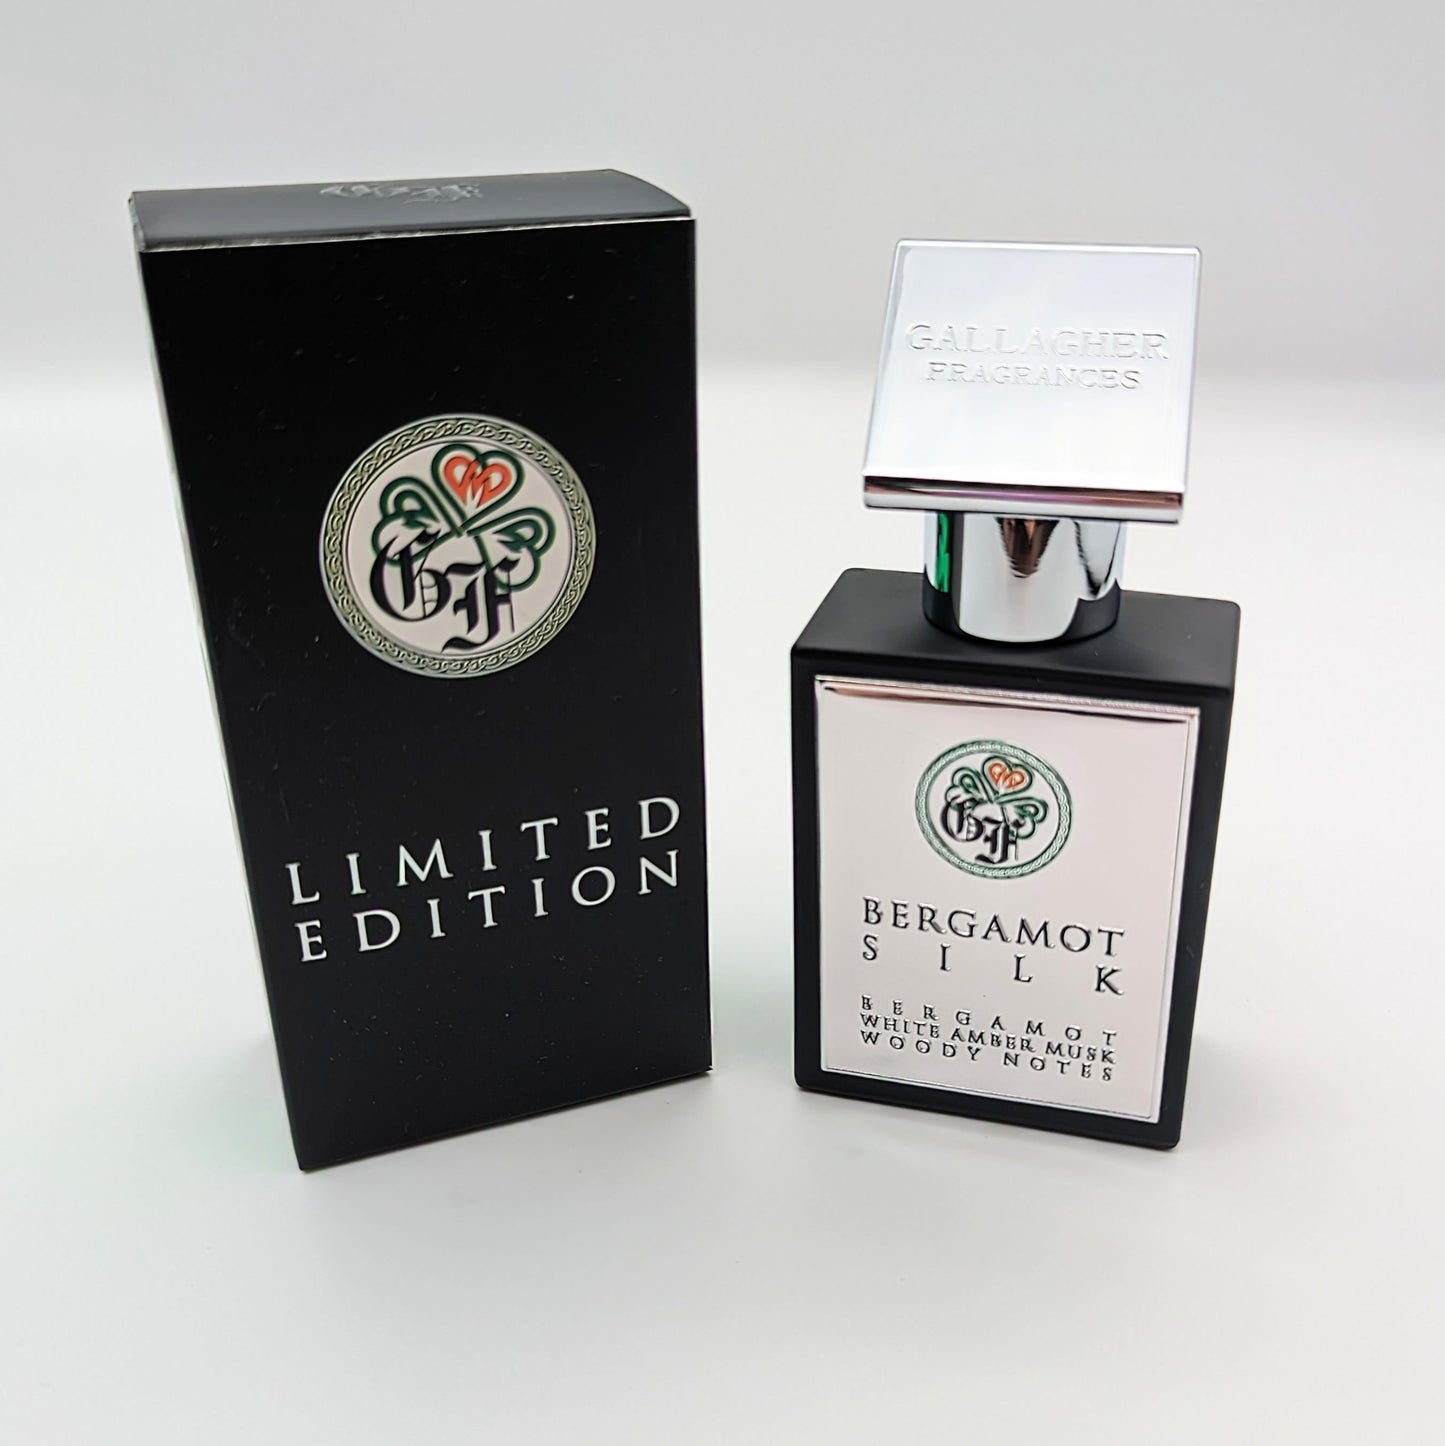 Bergamot Silk - Limited Edition